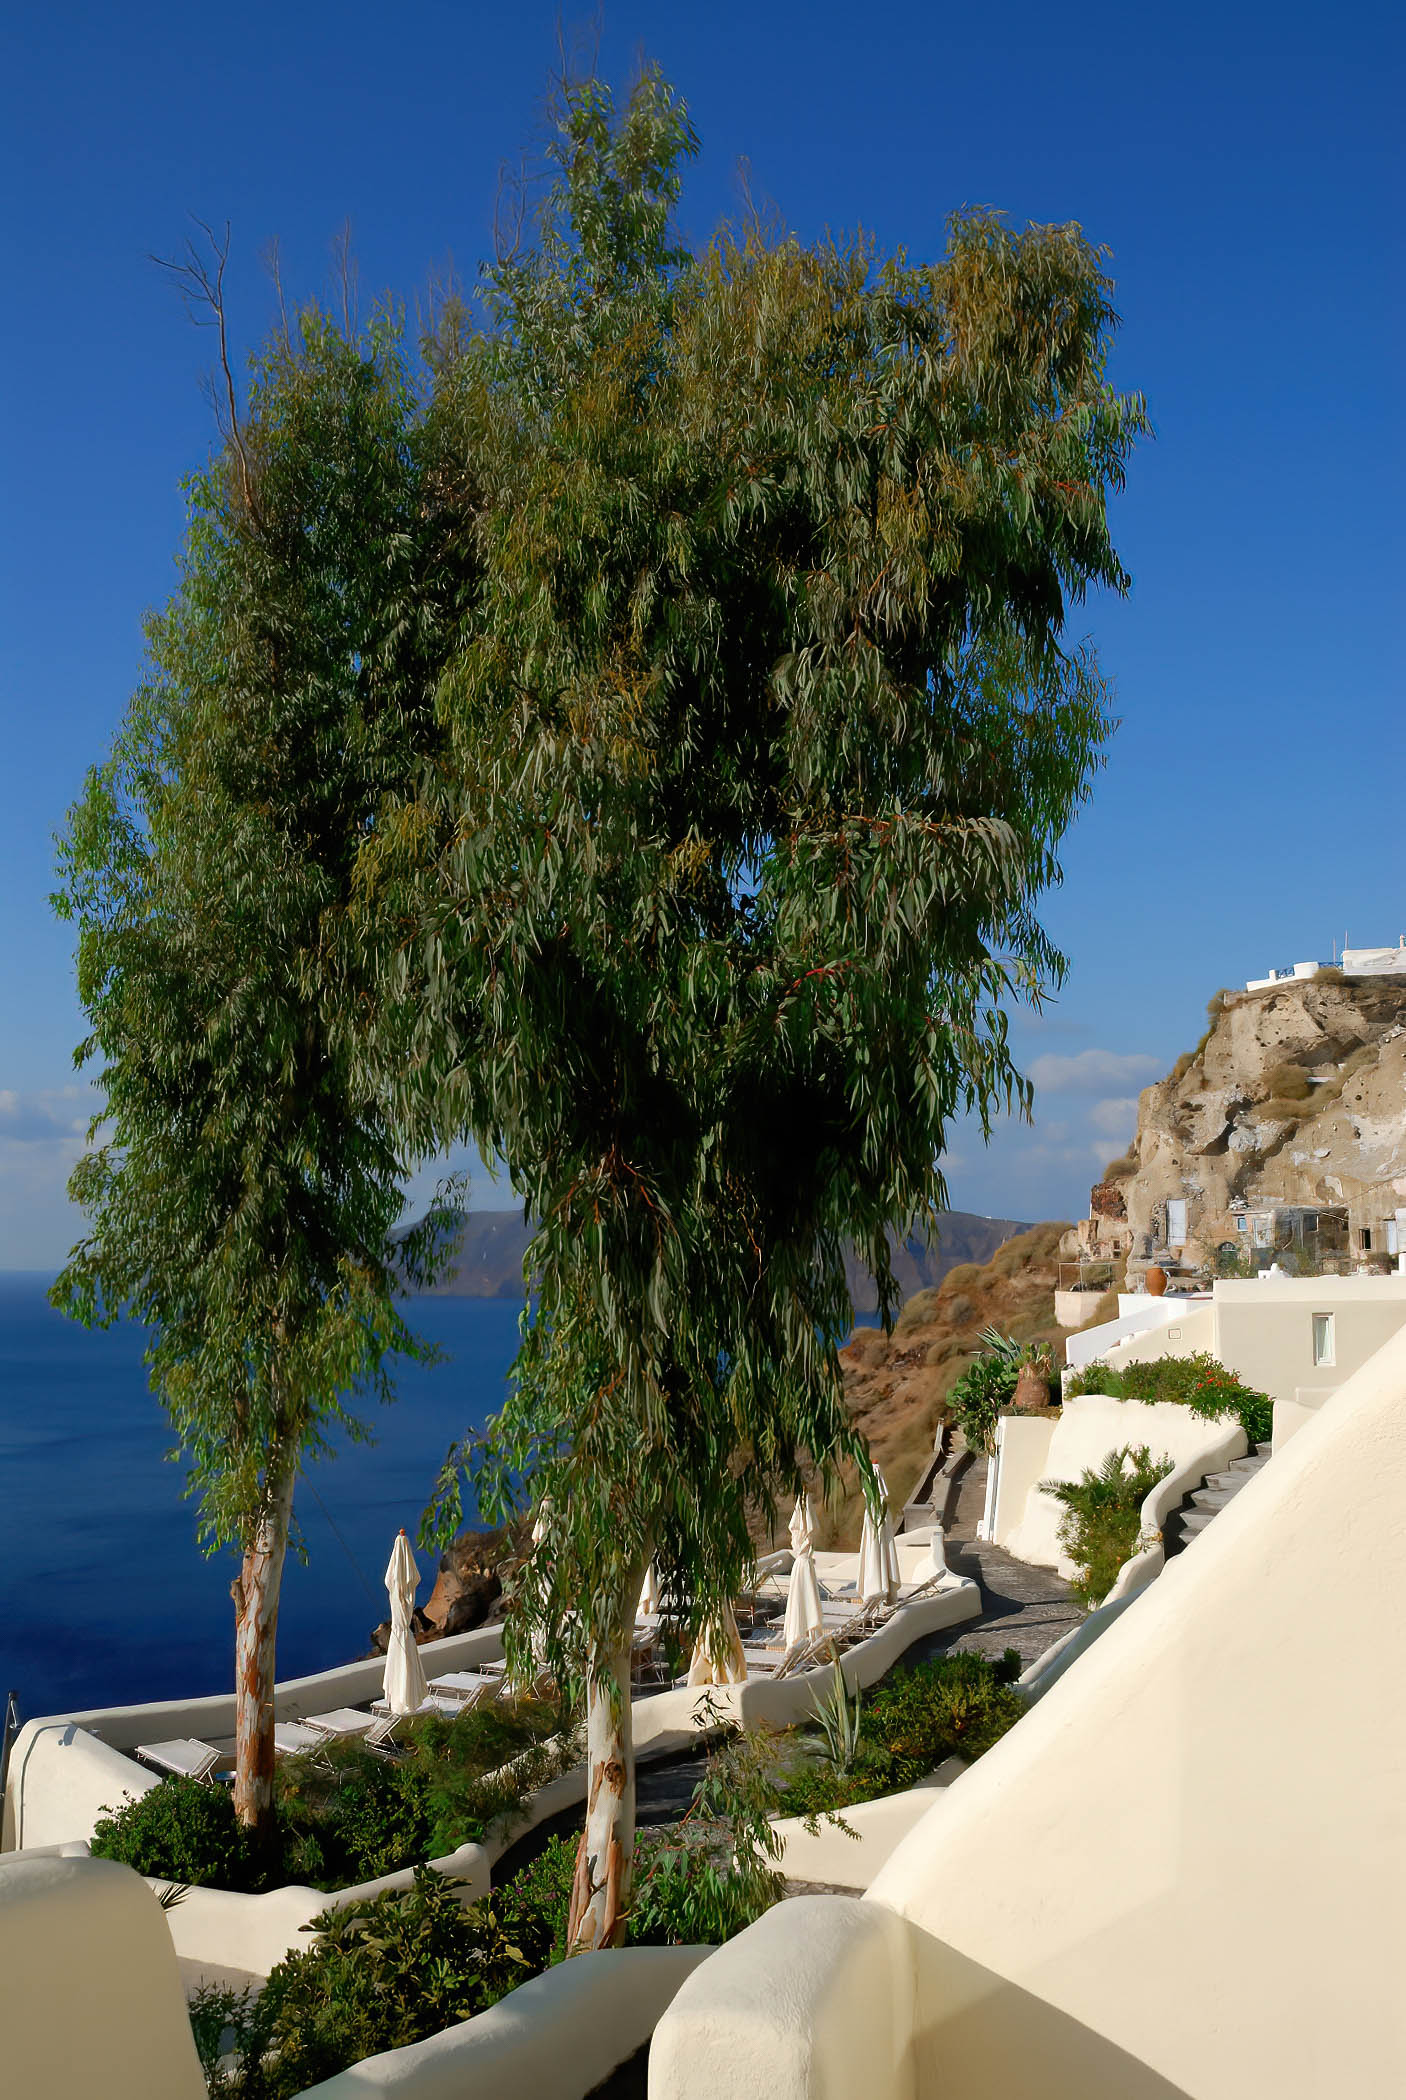 Mystique Hotel Santorini – Oia, Santorini Island, Greece - Cycladic Architecture